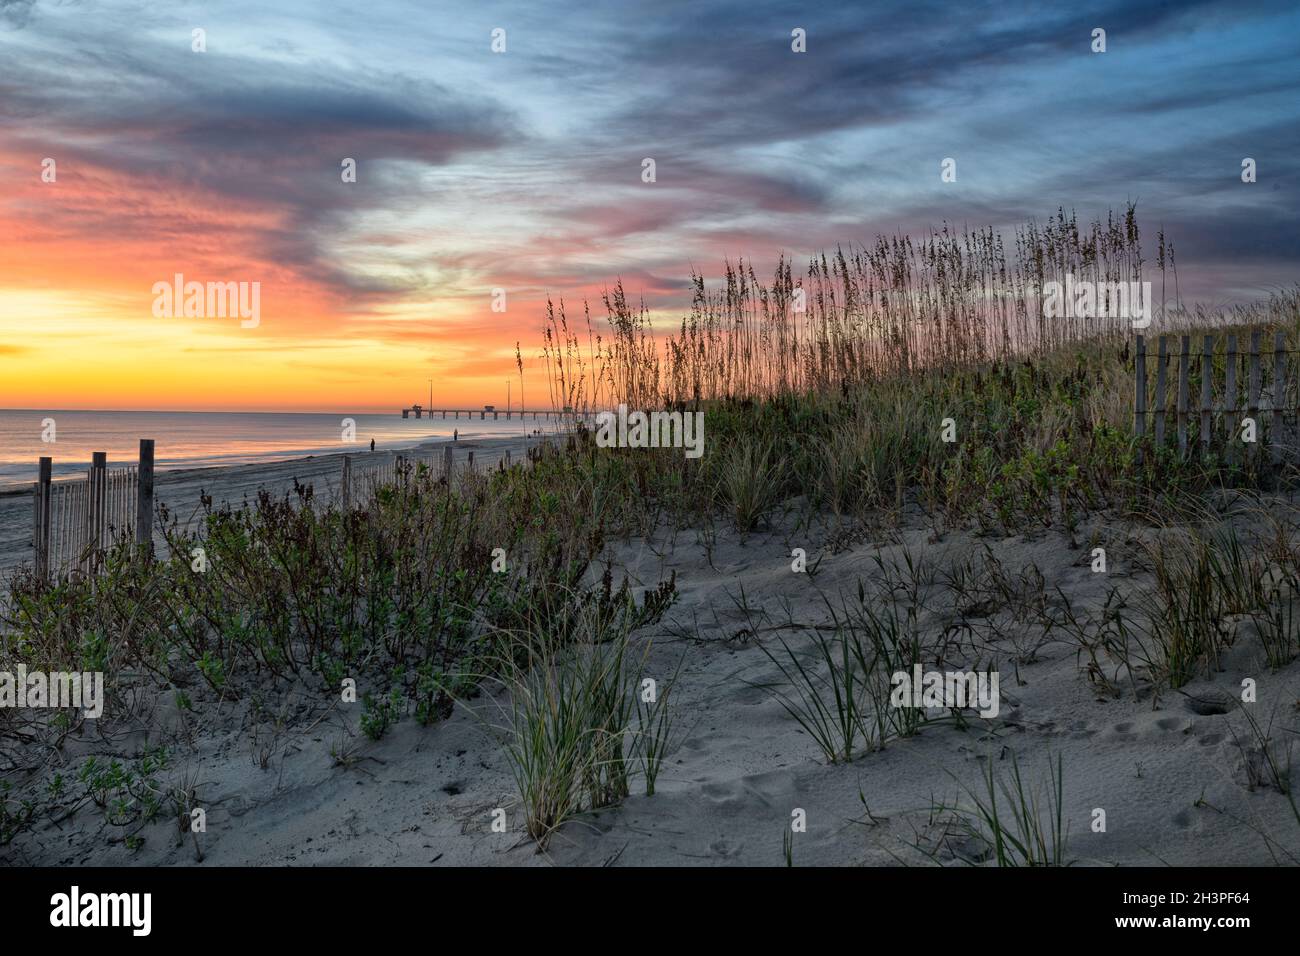 Wooden fences and sea oats at predawn, Nags Head, North Carolina, Outer Banks Stock Photo